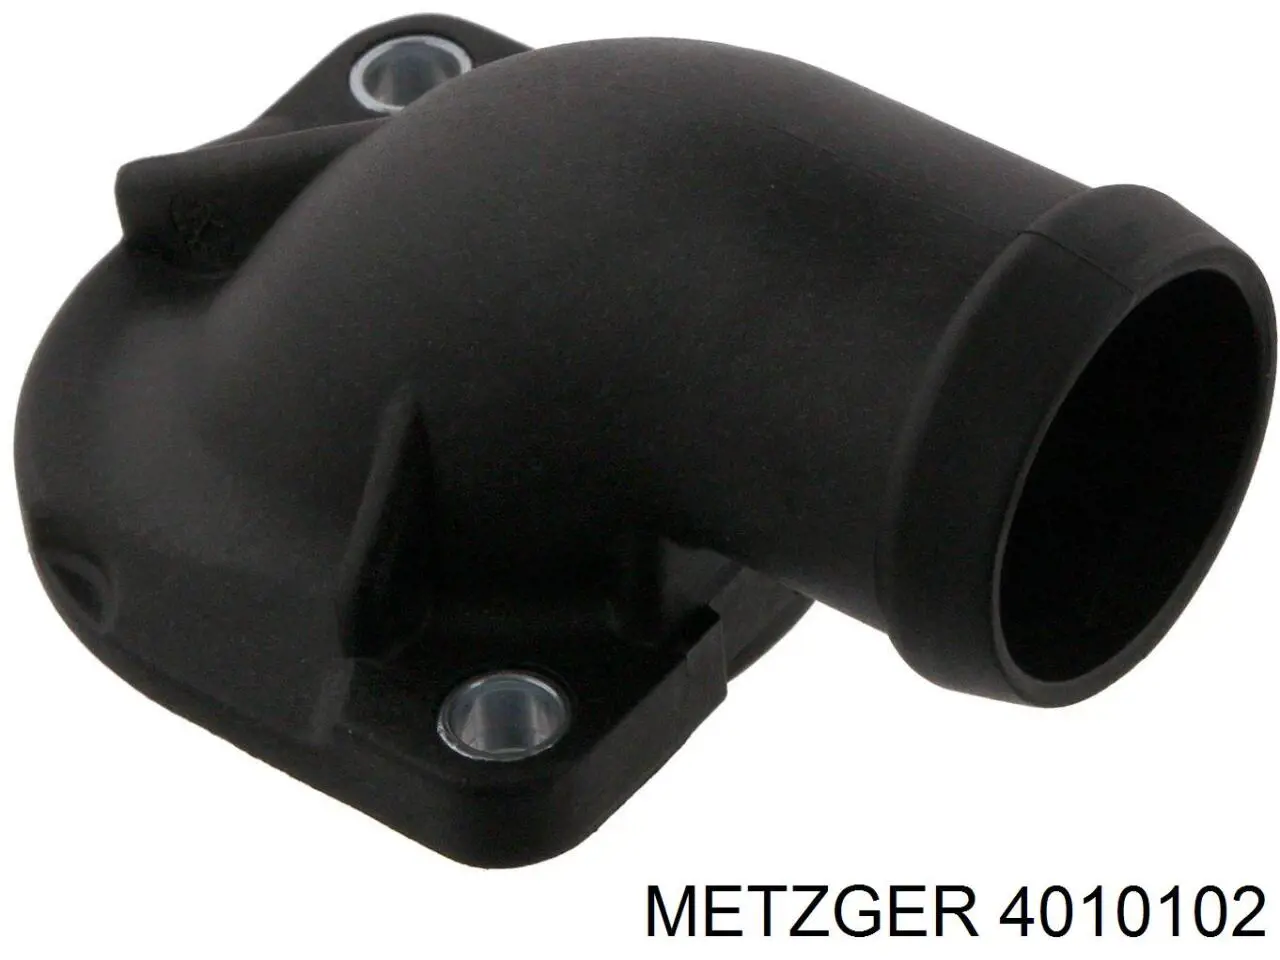 4010102 Metzger tapa de termostato